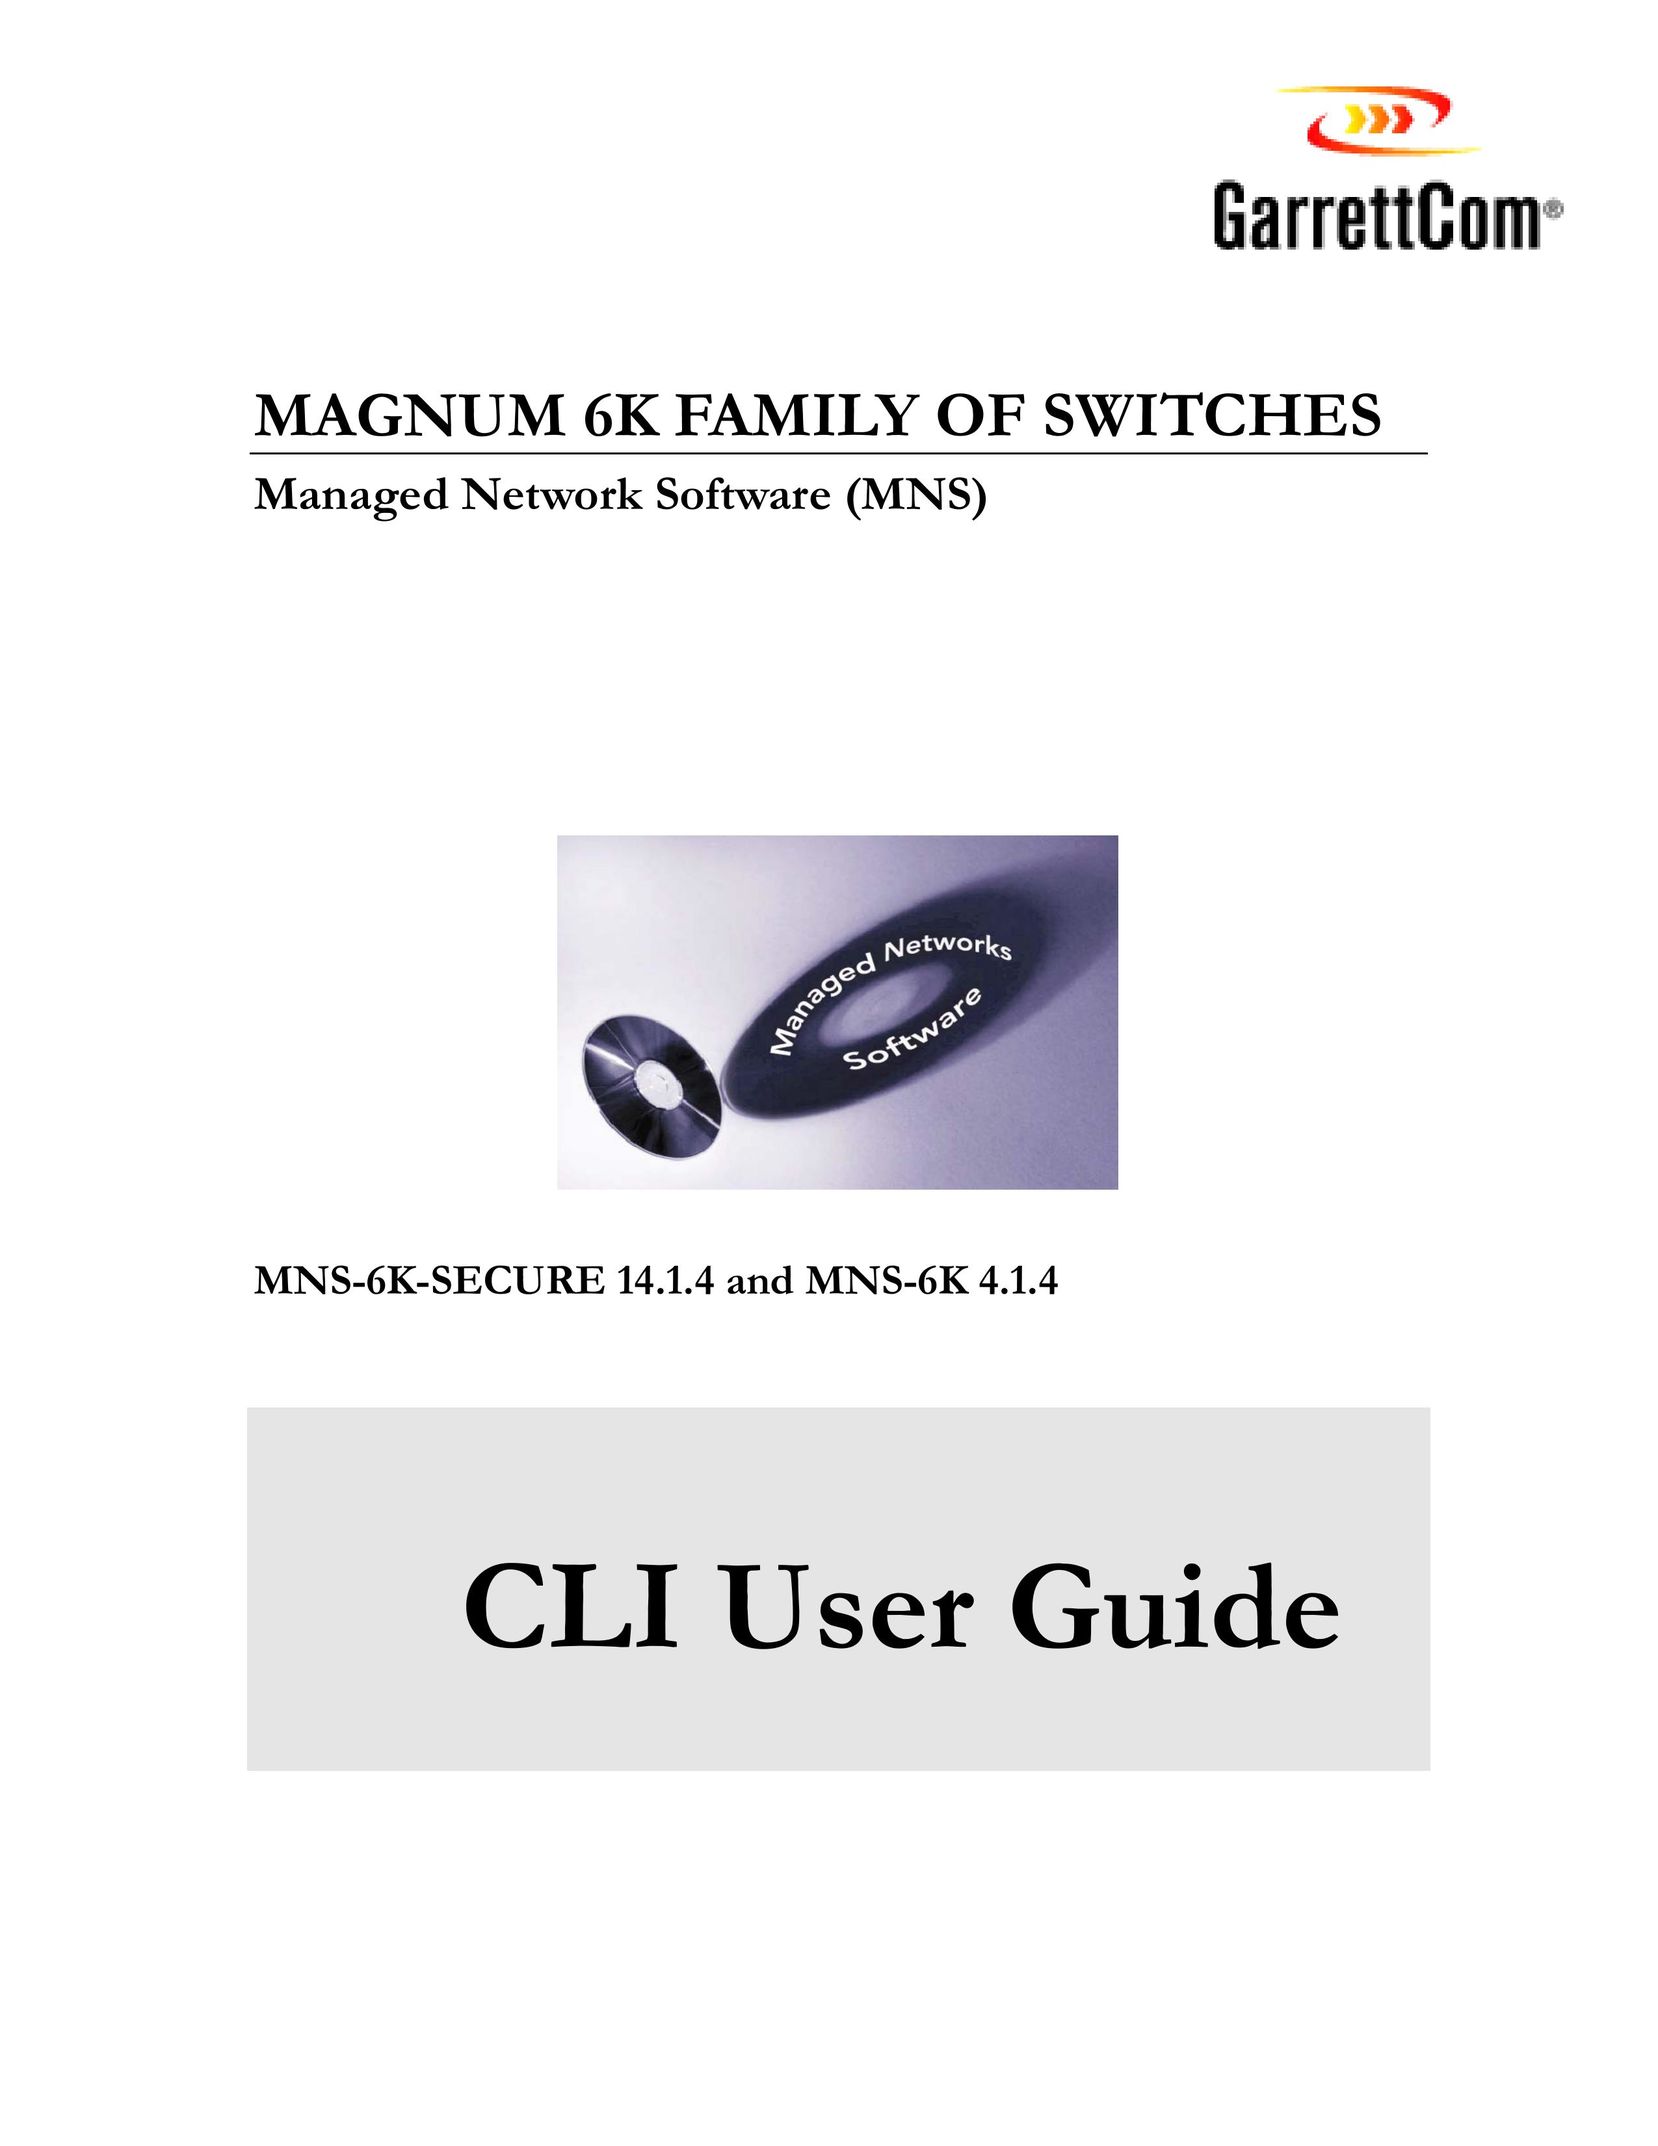 GarrettCom MNS-6K 4.1.4 Switch User Manual